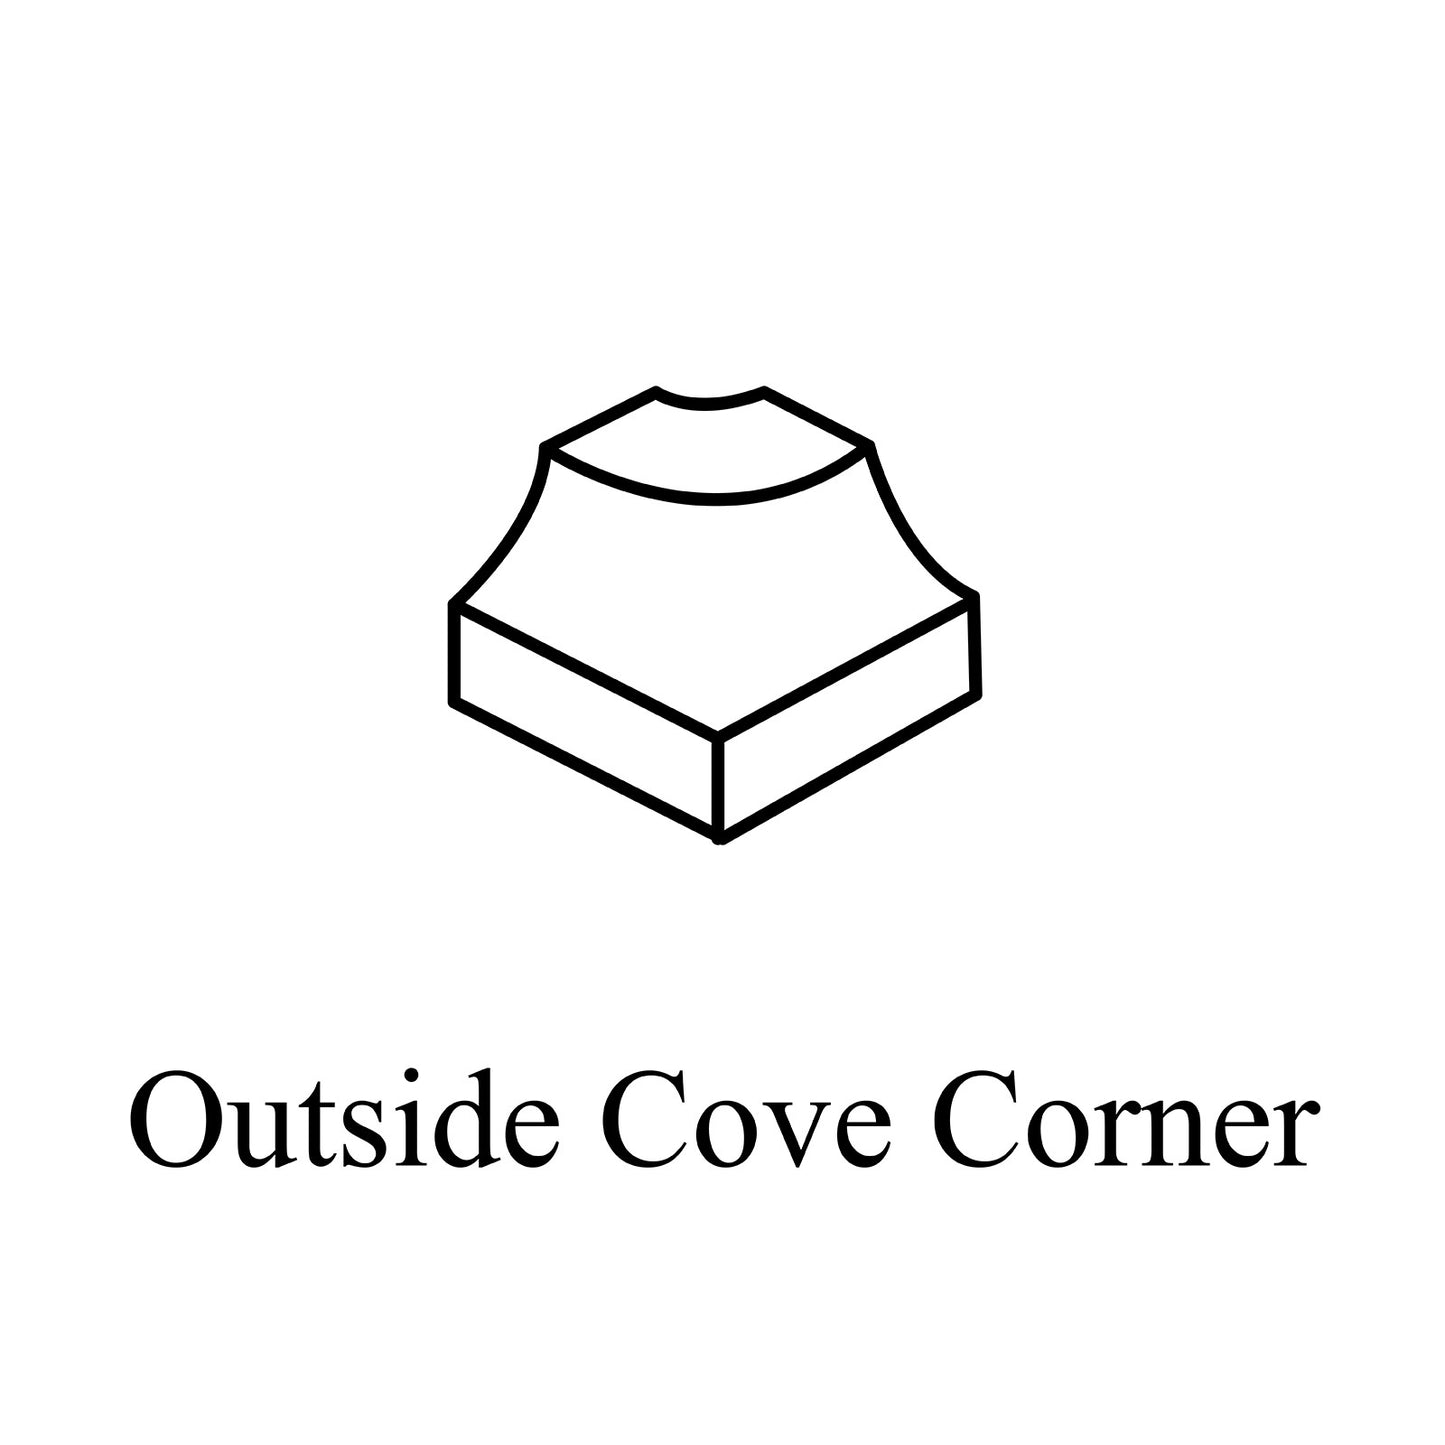 Outside Cove Corner